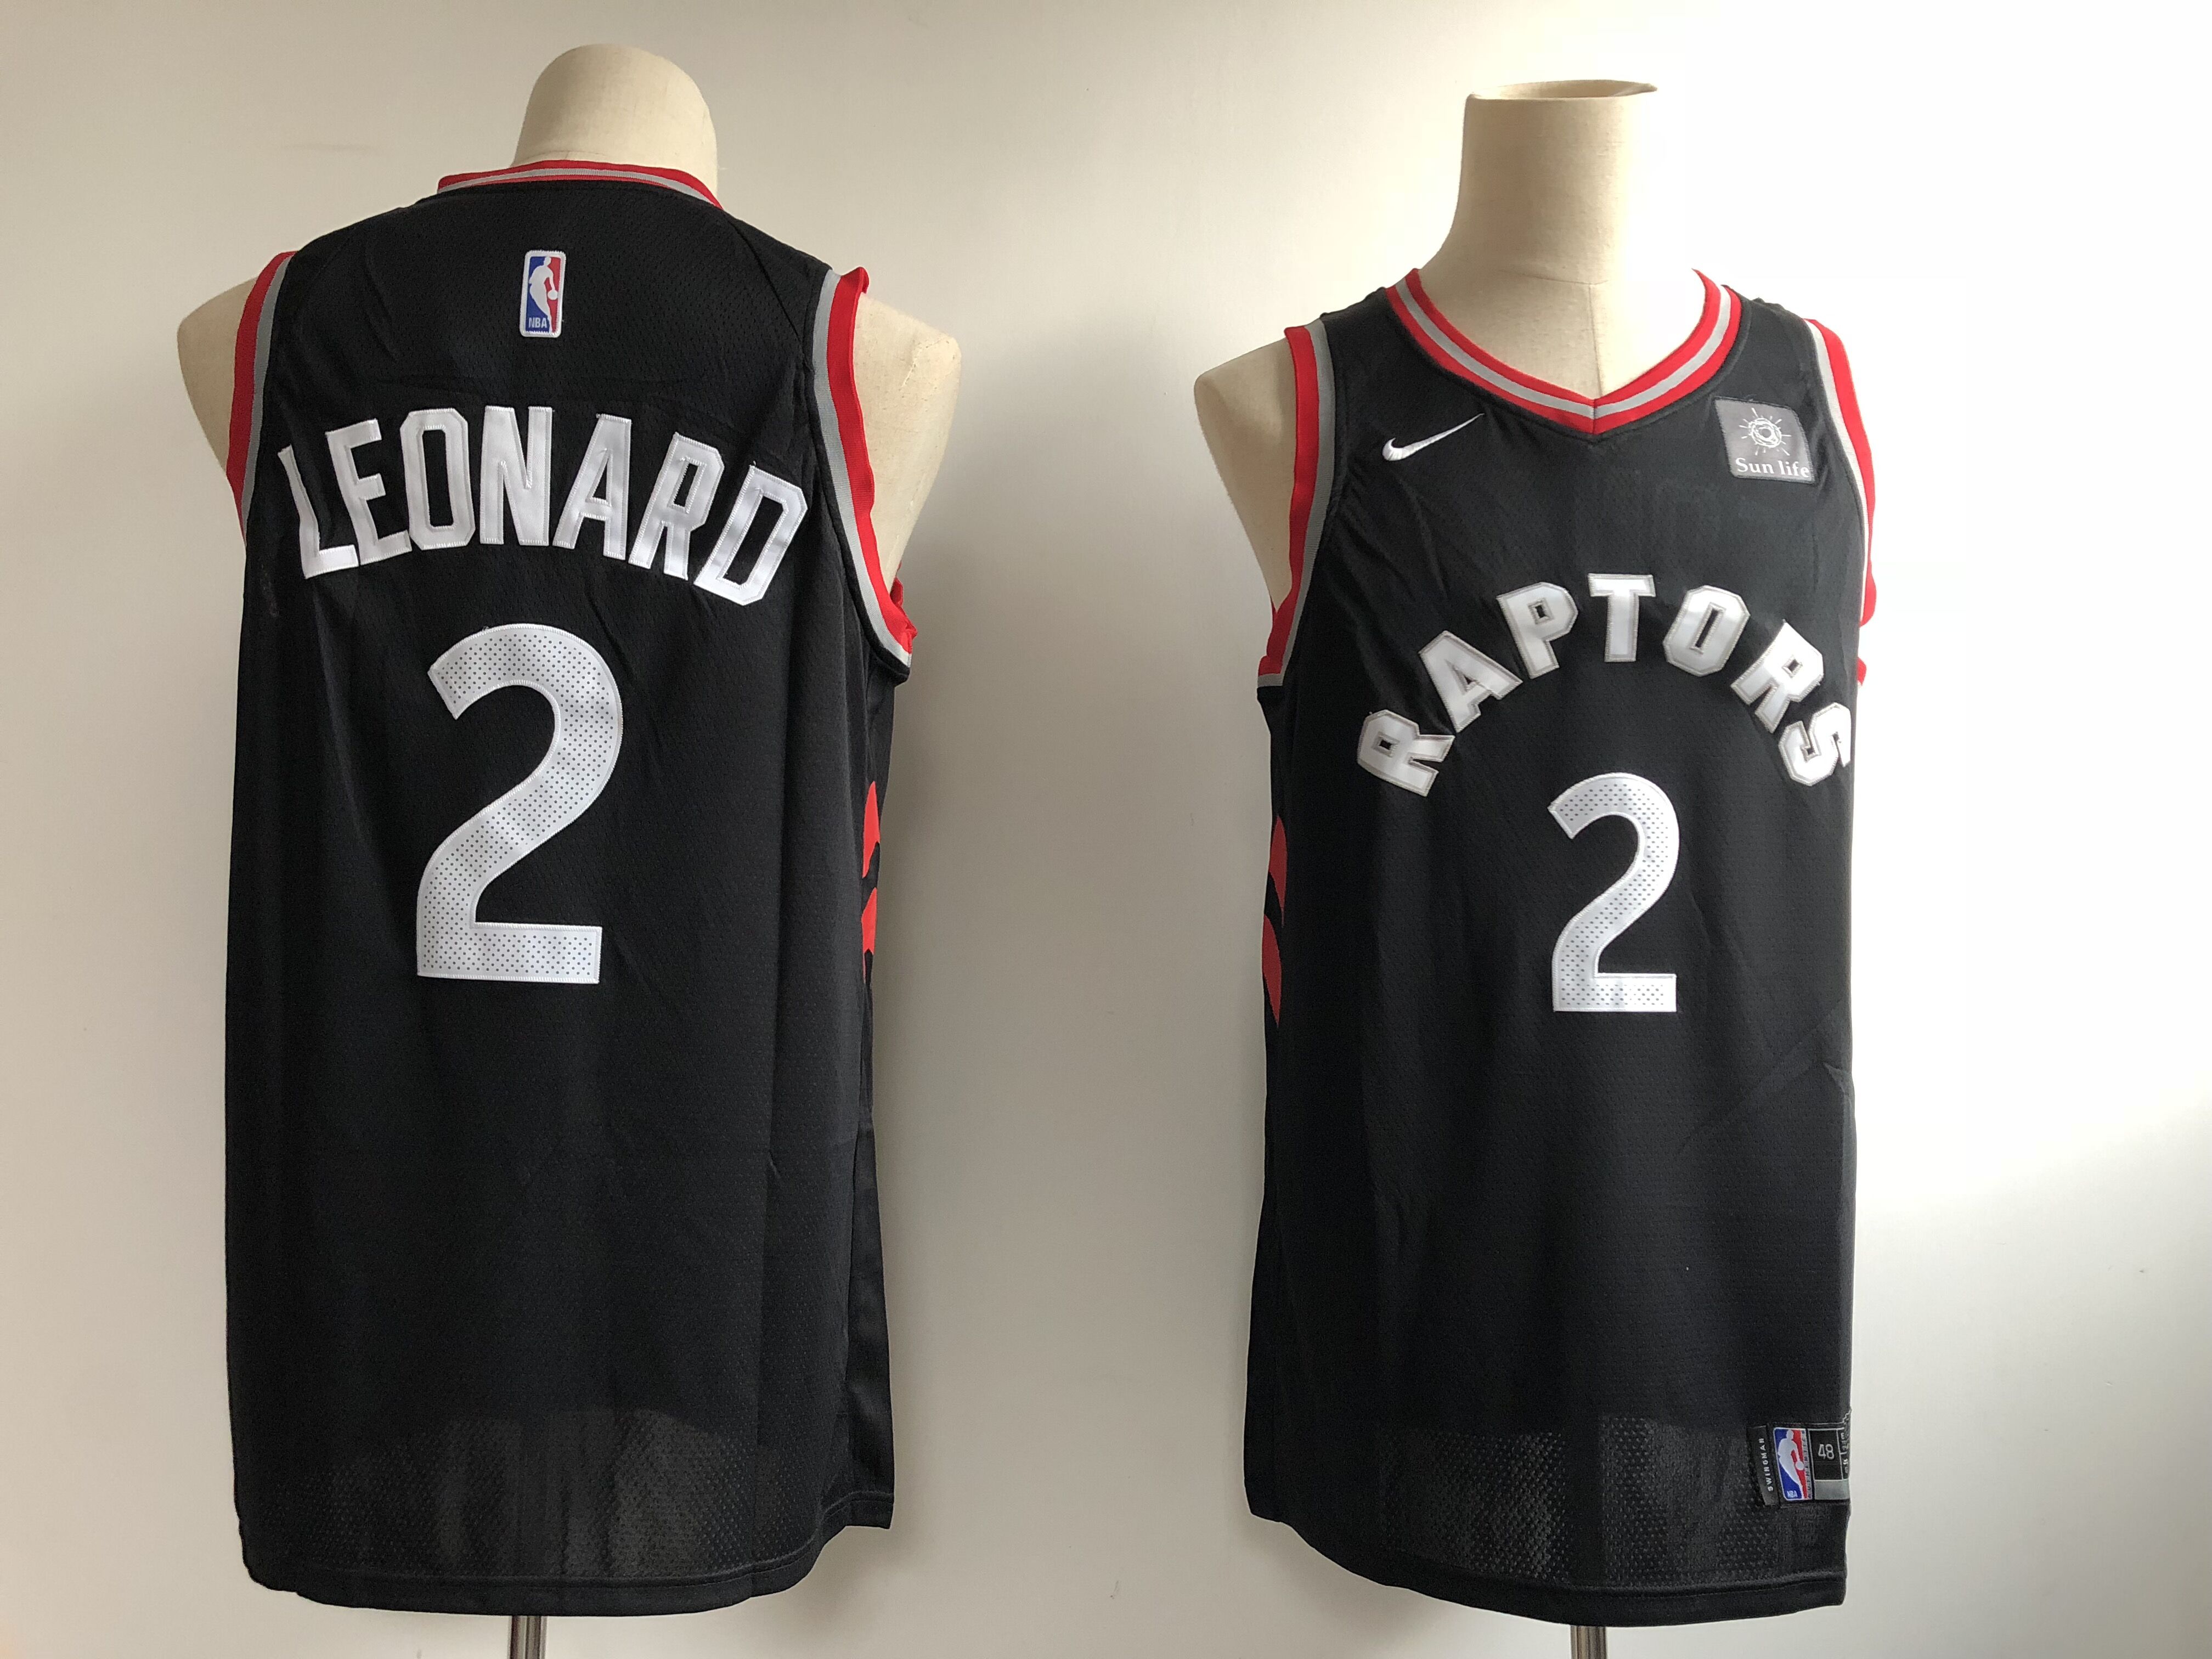 2 Leonard black Game NBA Nike Jerseys 